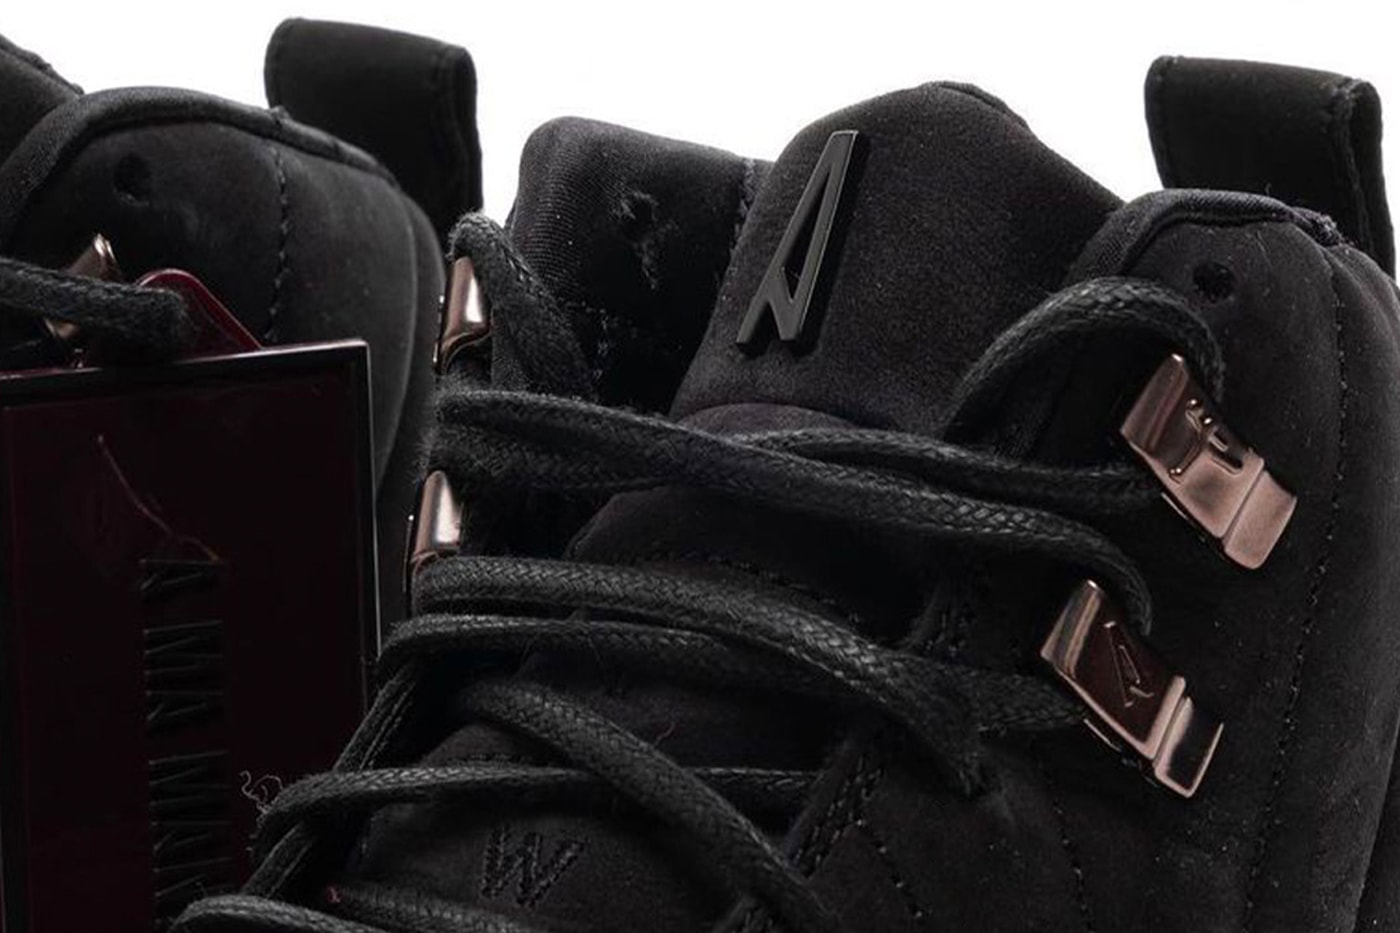 A Ma Maniére Air Jordan 12 Black Detailed Look Release Info DV6989-001 Date Buy Price Black Burgundy Crush